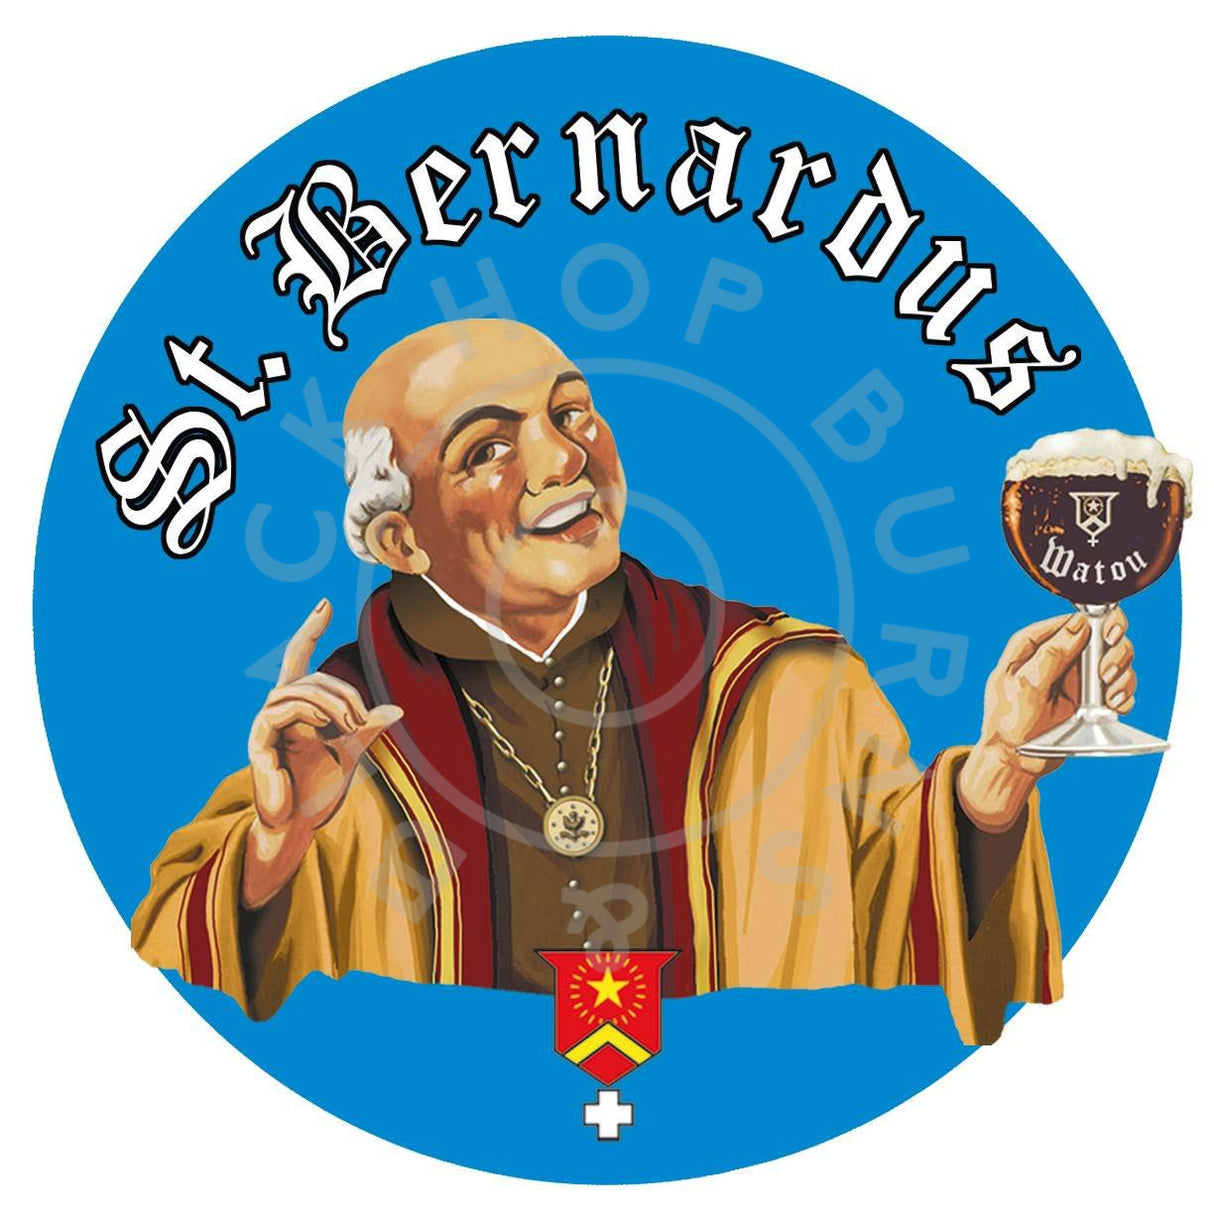 St Bernardus Extra 4 Blond 4.8% (330ml)-Hop Burns & Black